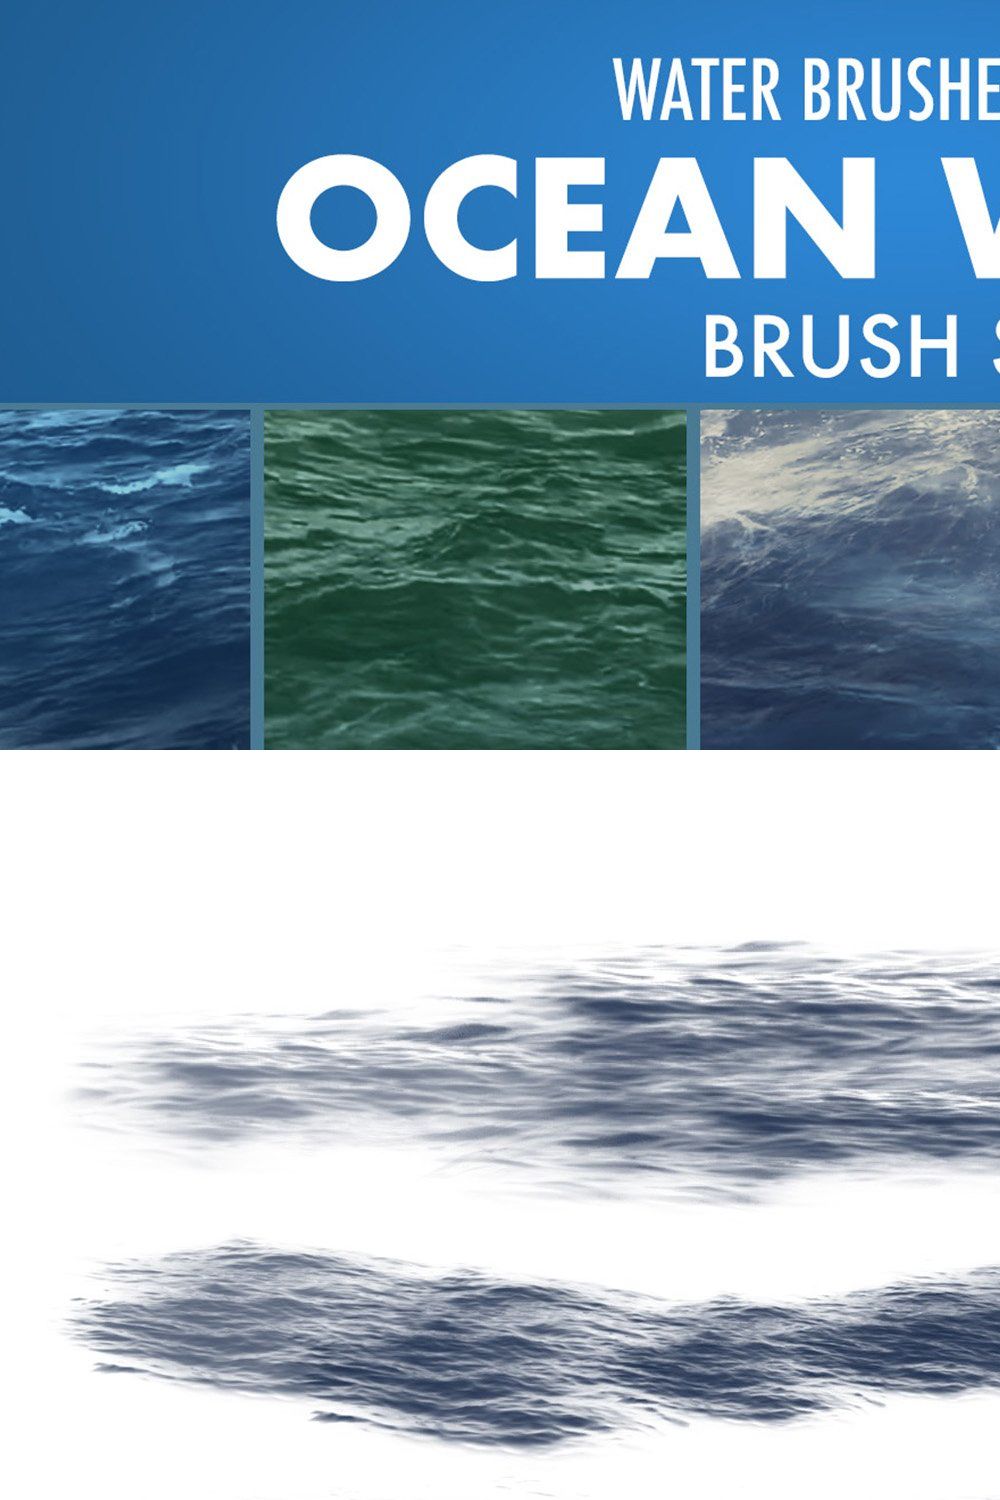 Ocean waves brush set pinterest preview image.